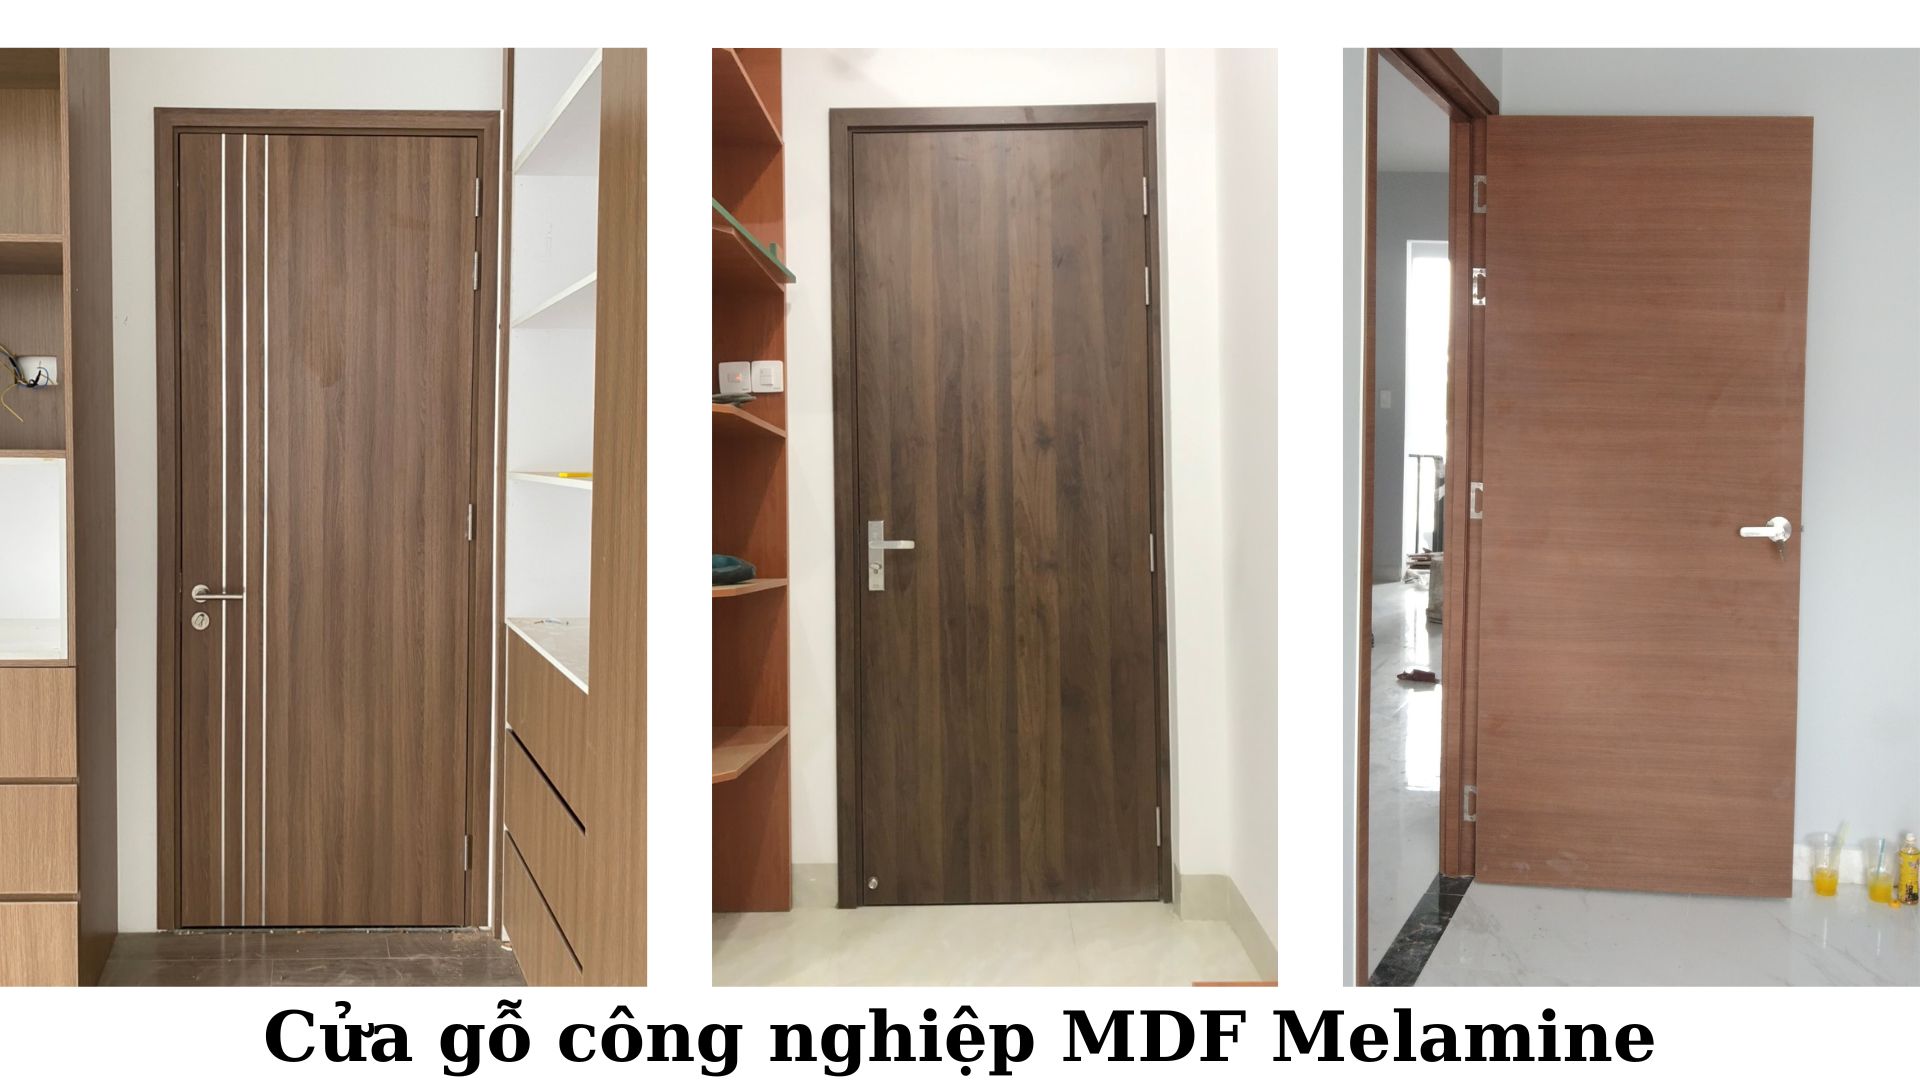 Cửa MDF Melamine tại Tân Phú - Cửa thông phòng